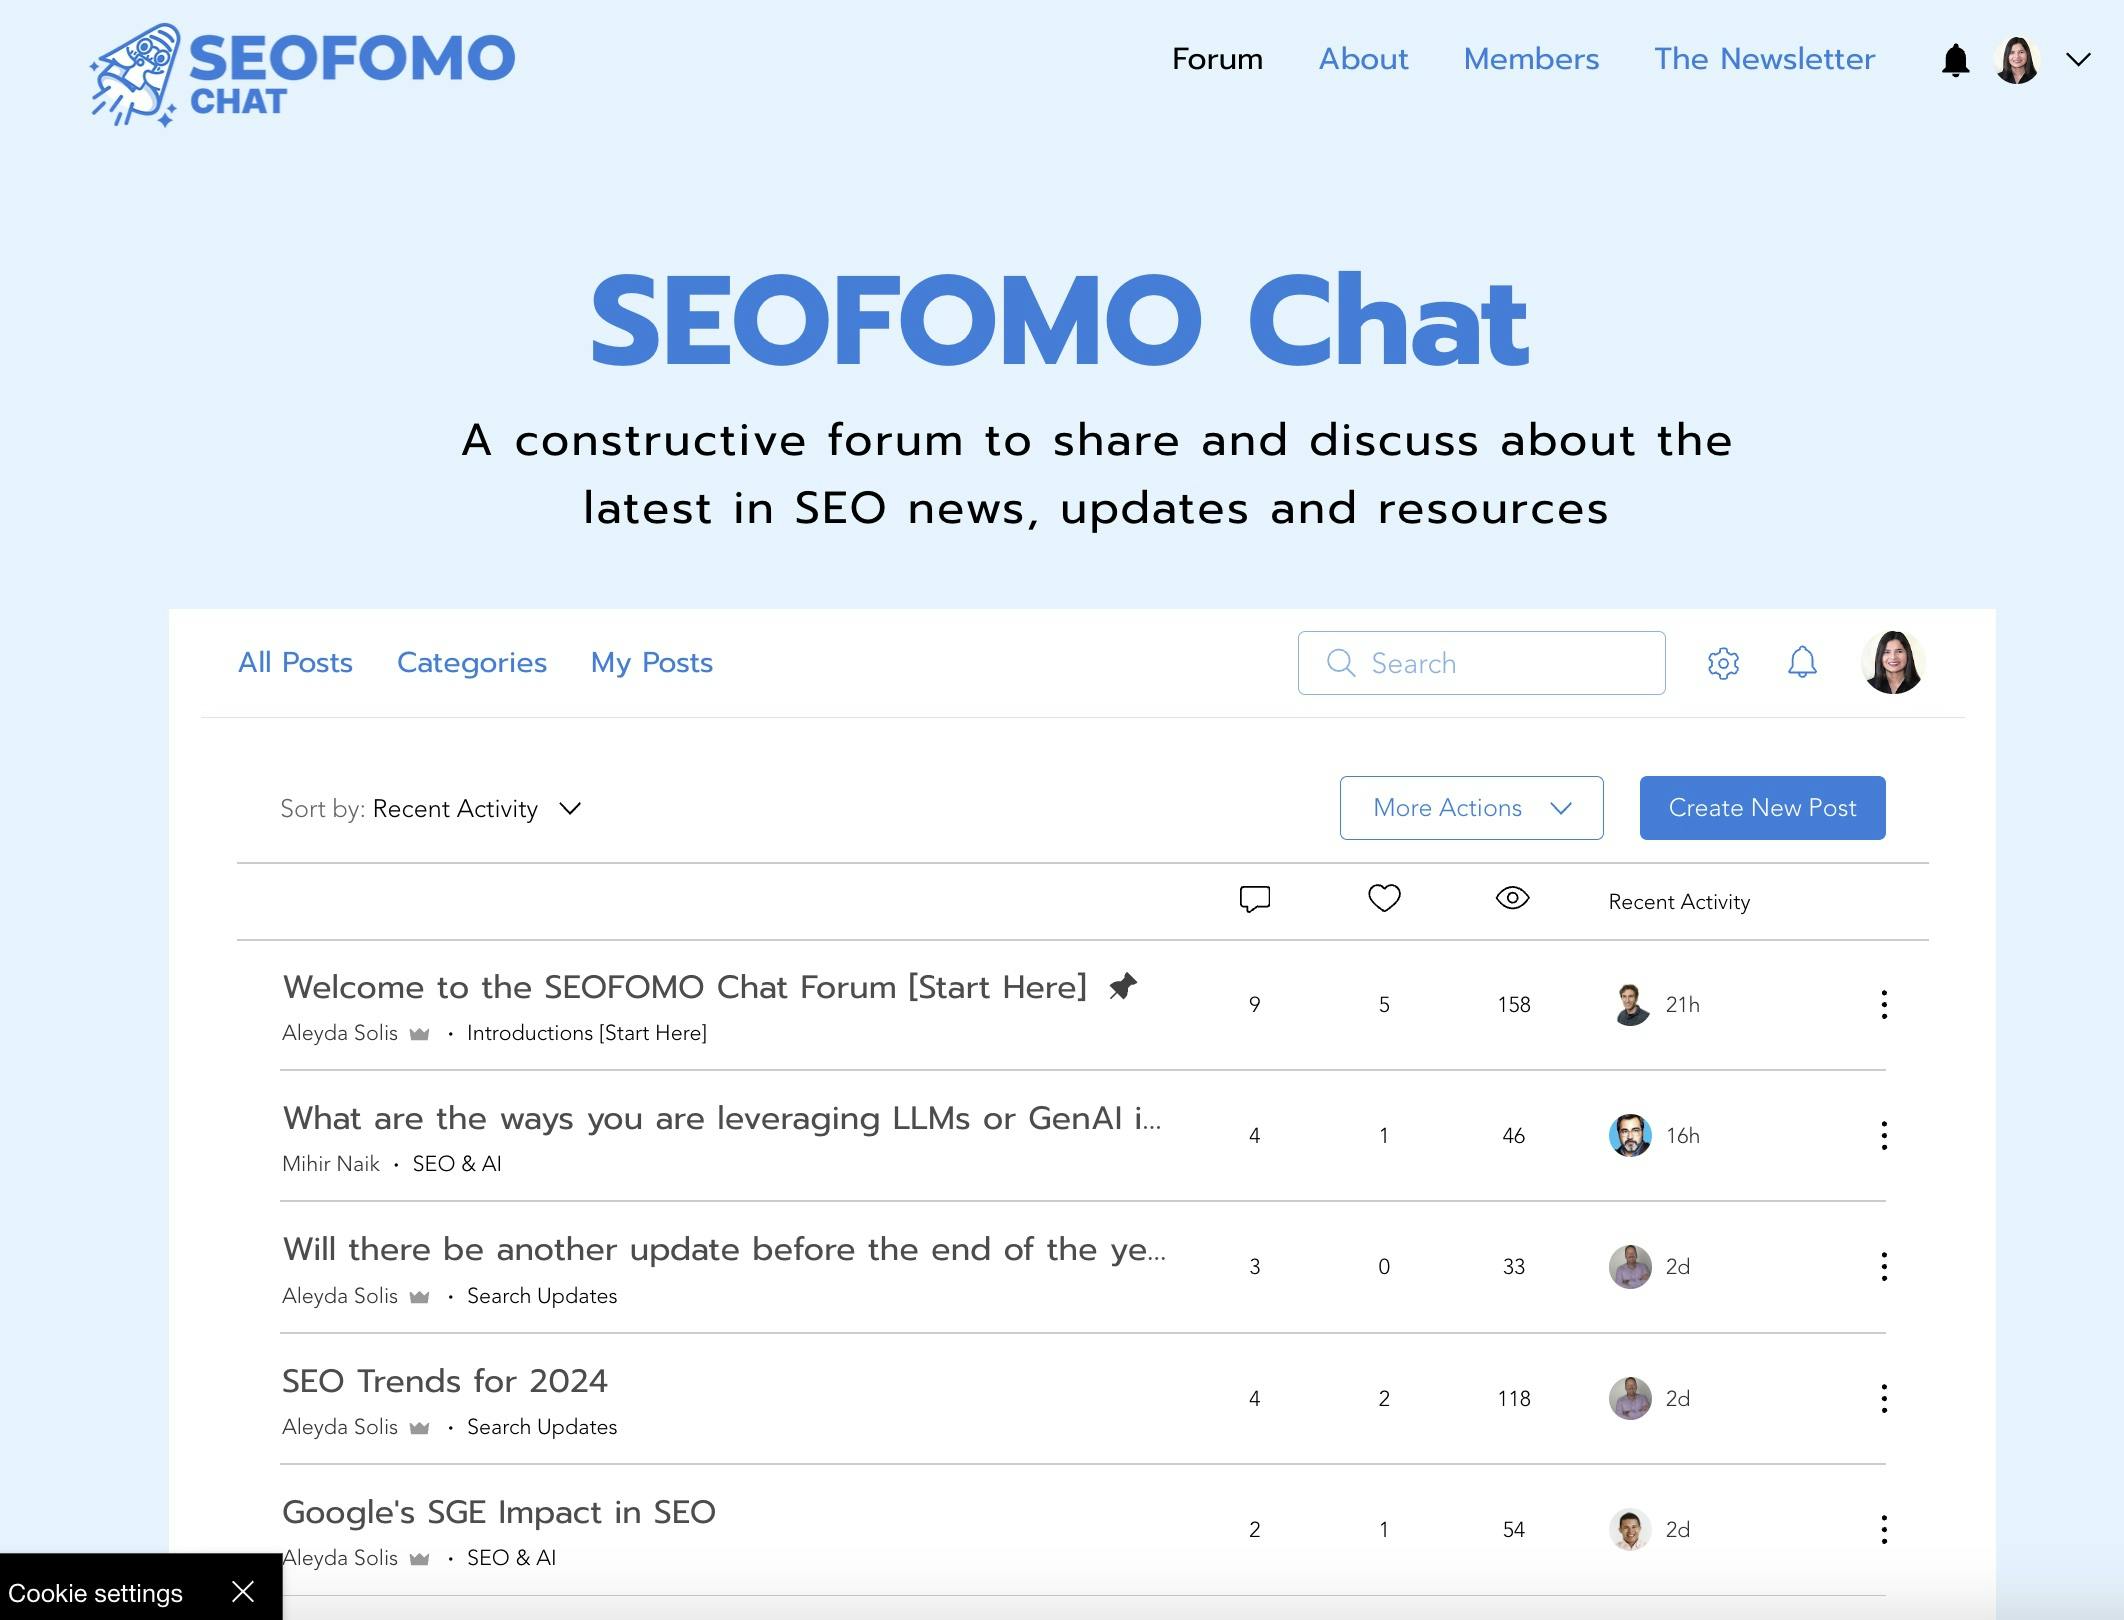 Join the SEOFOMO Chat Forum